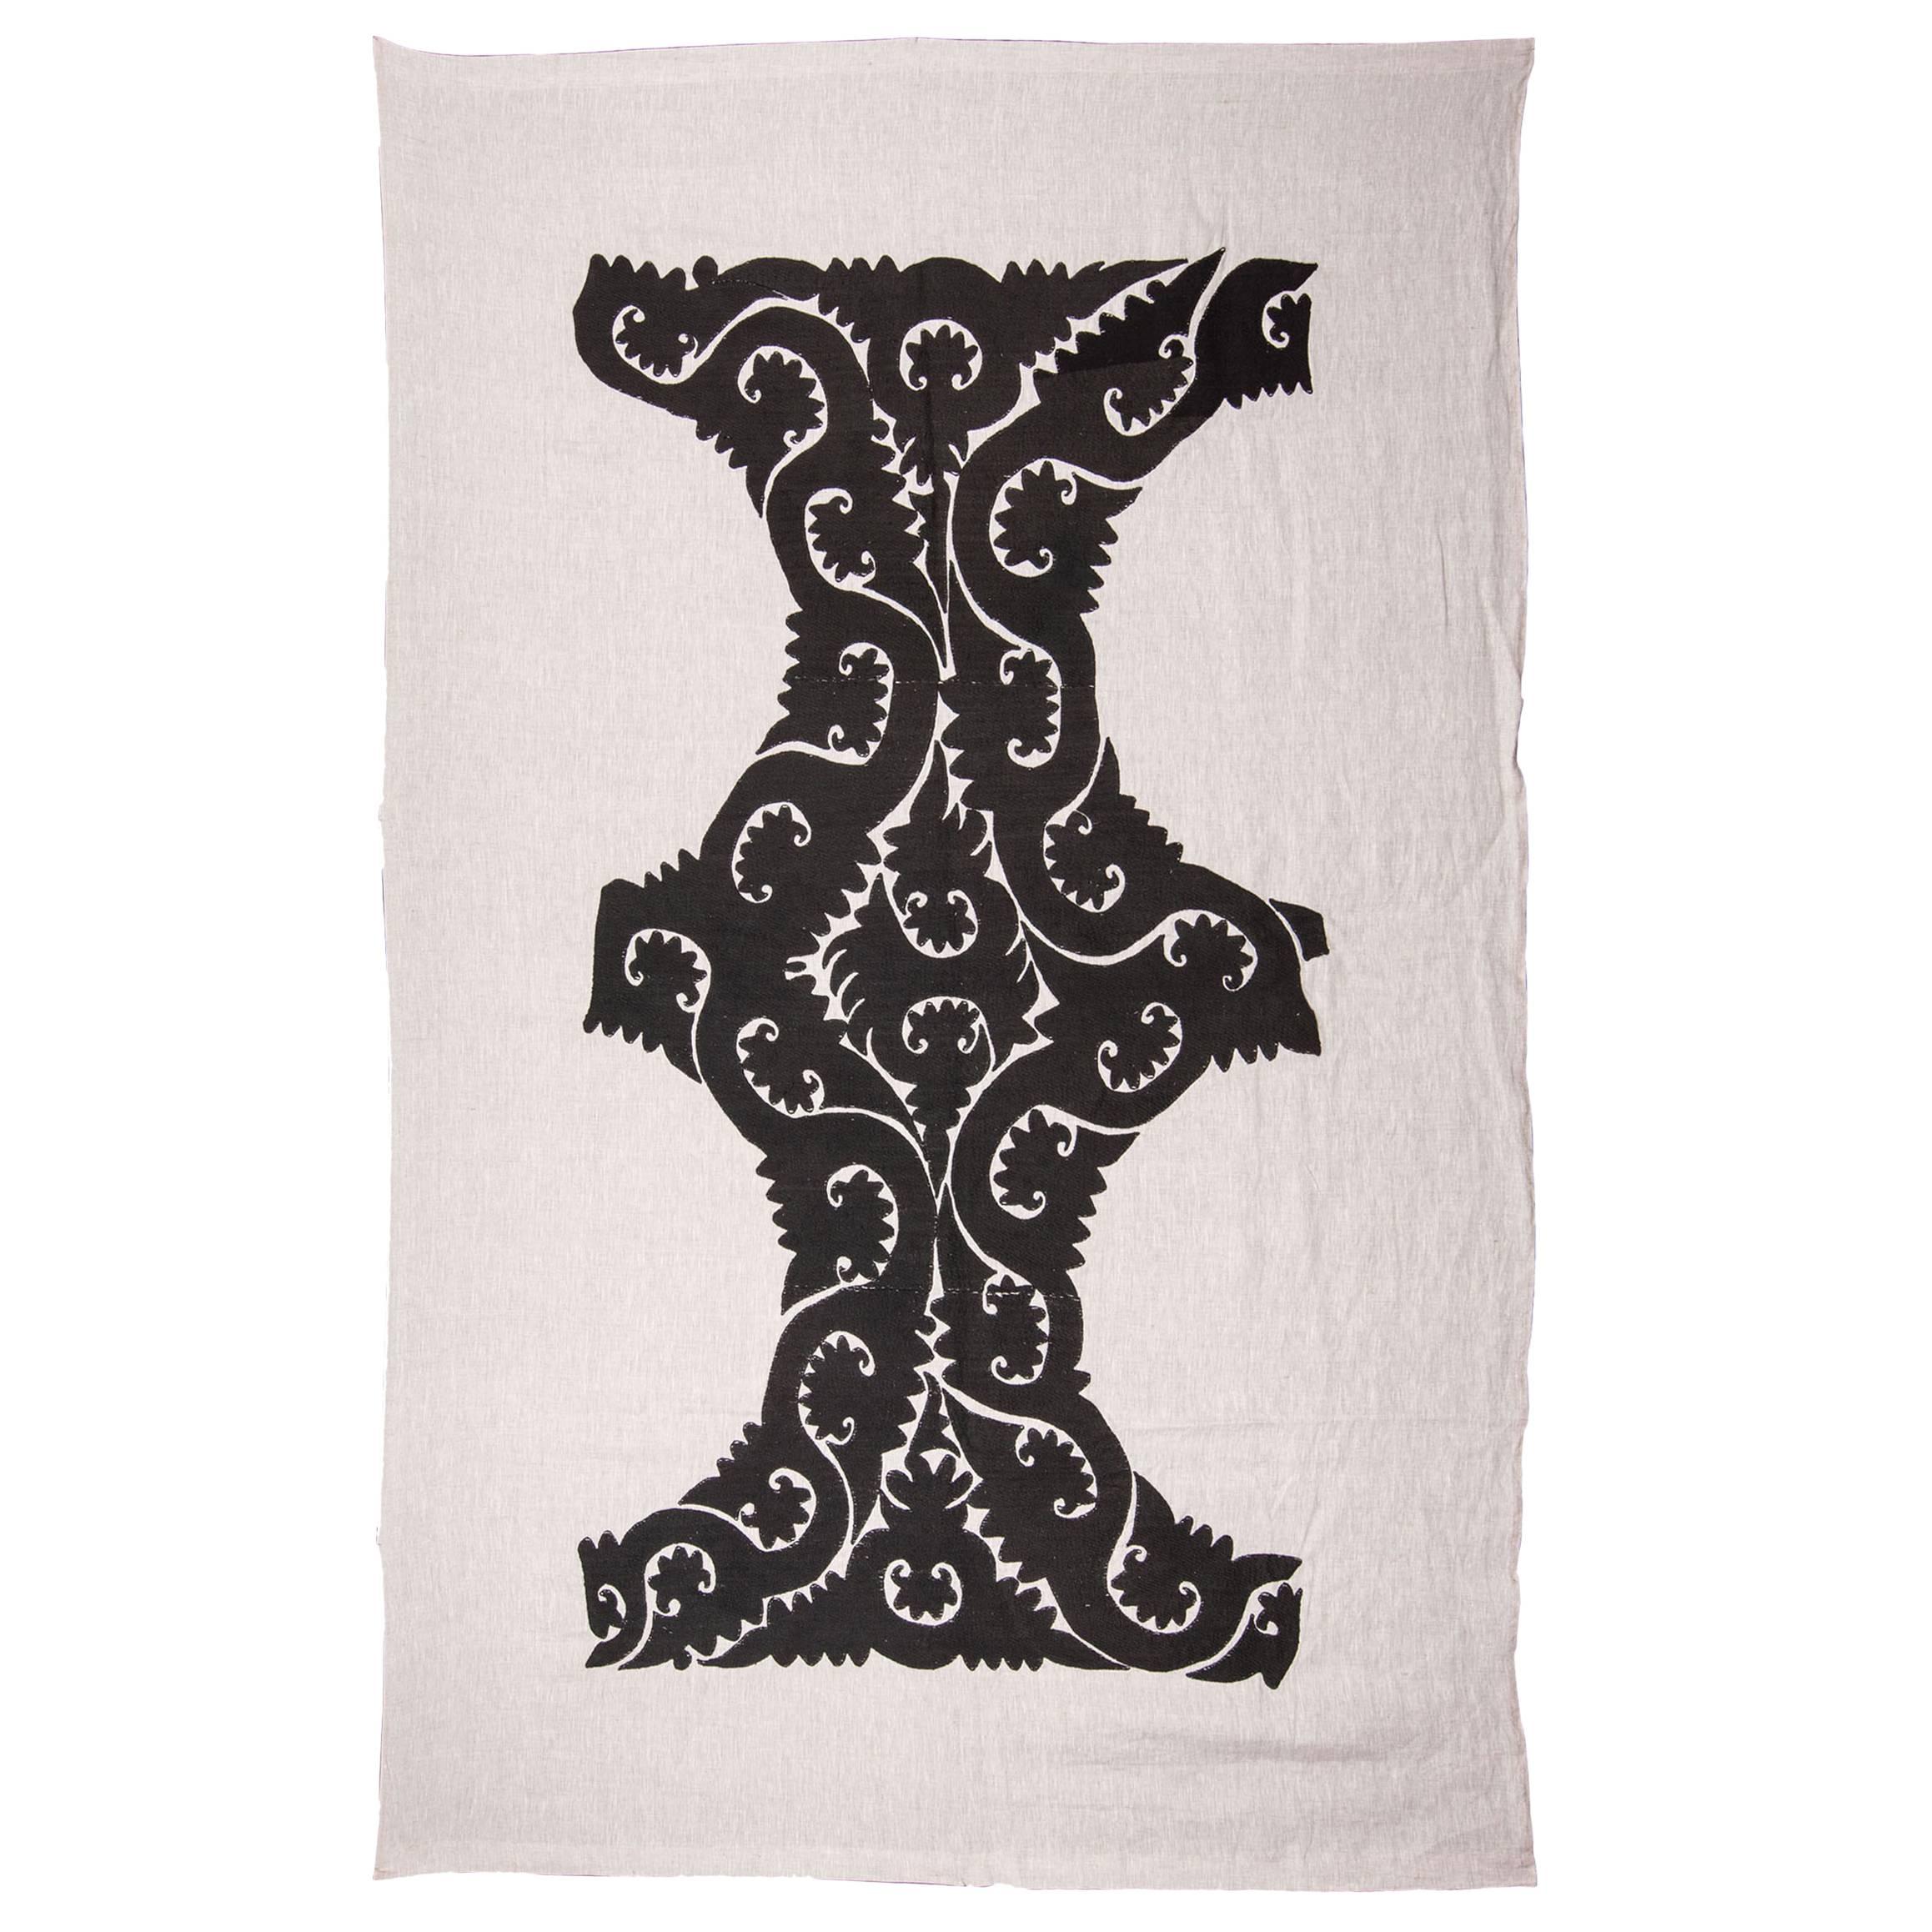 Vintage Uzbek Embroidery/Applique, Bed Spread/Wall Hanging For Sale